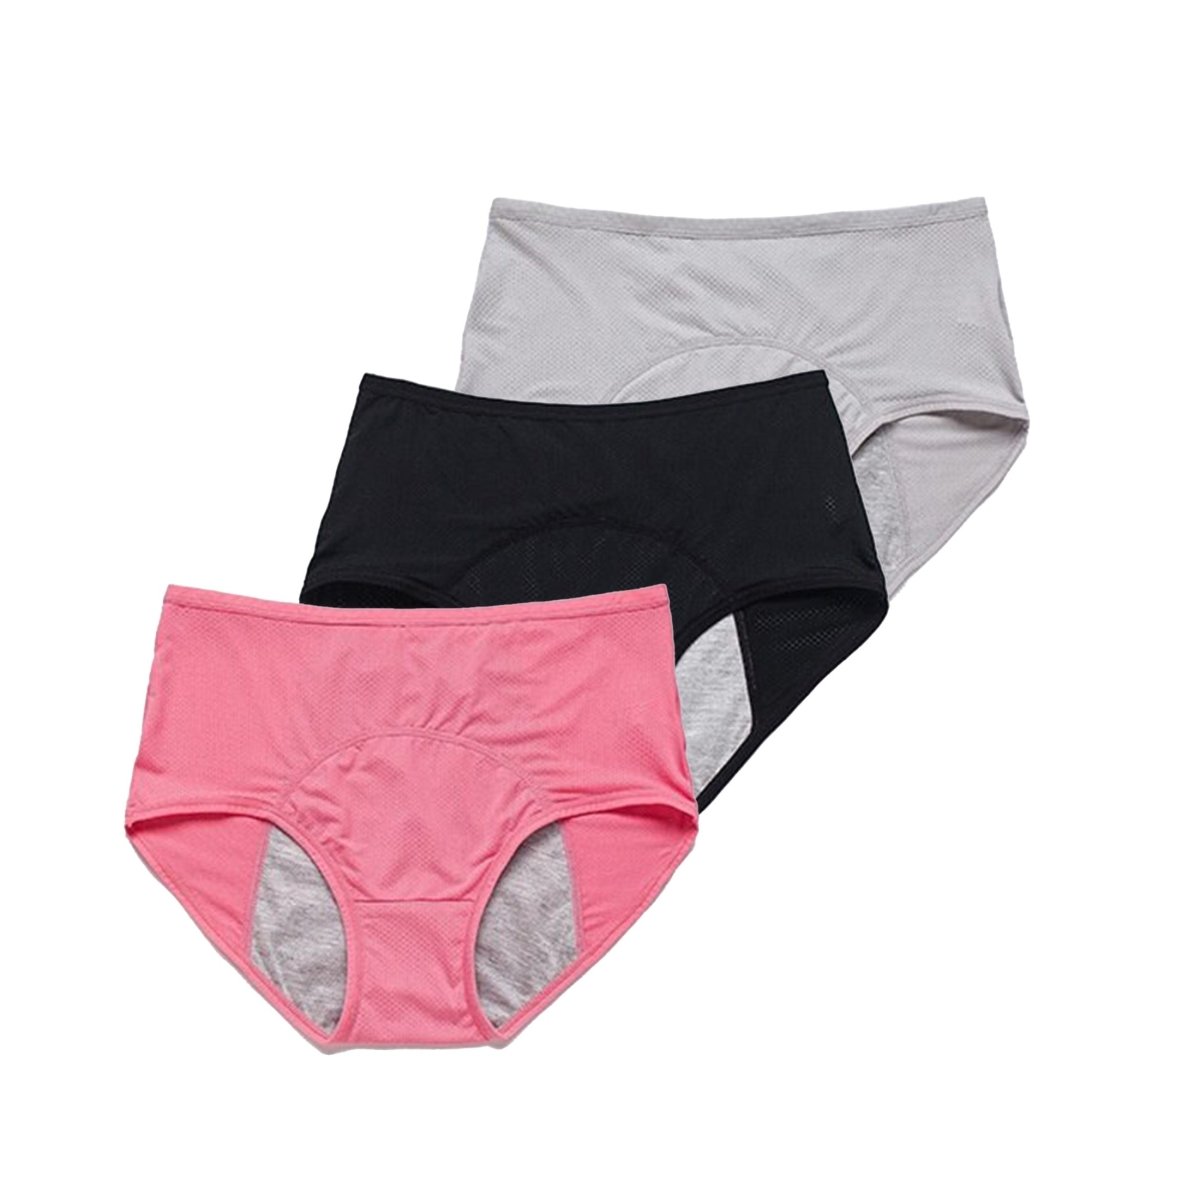 Everdries Leakproof Underwear, Leakproof High Waisted Panties For Women